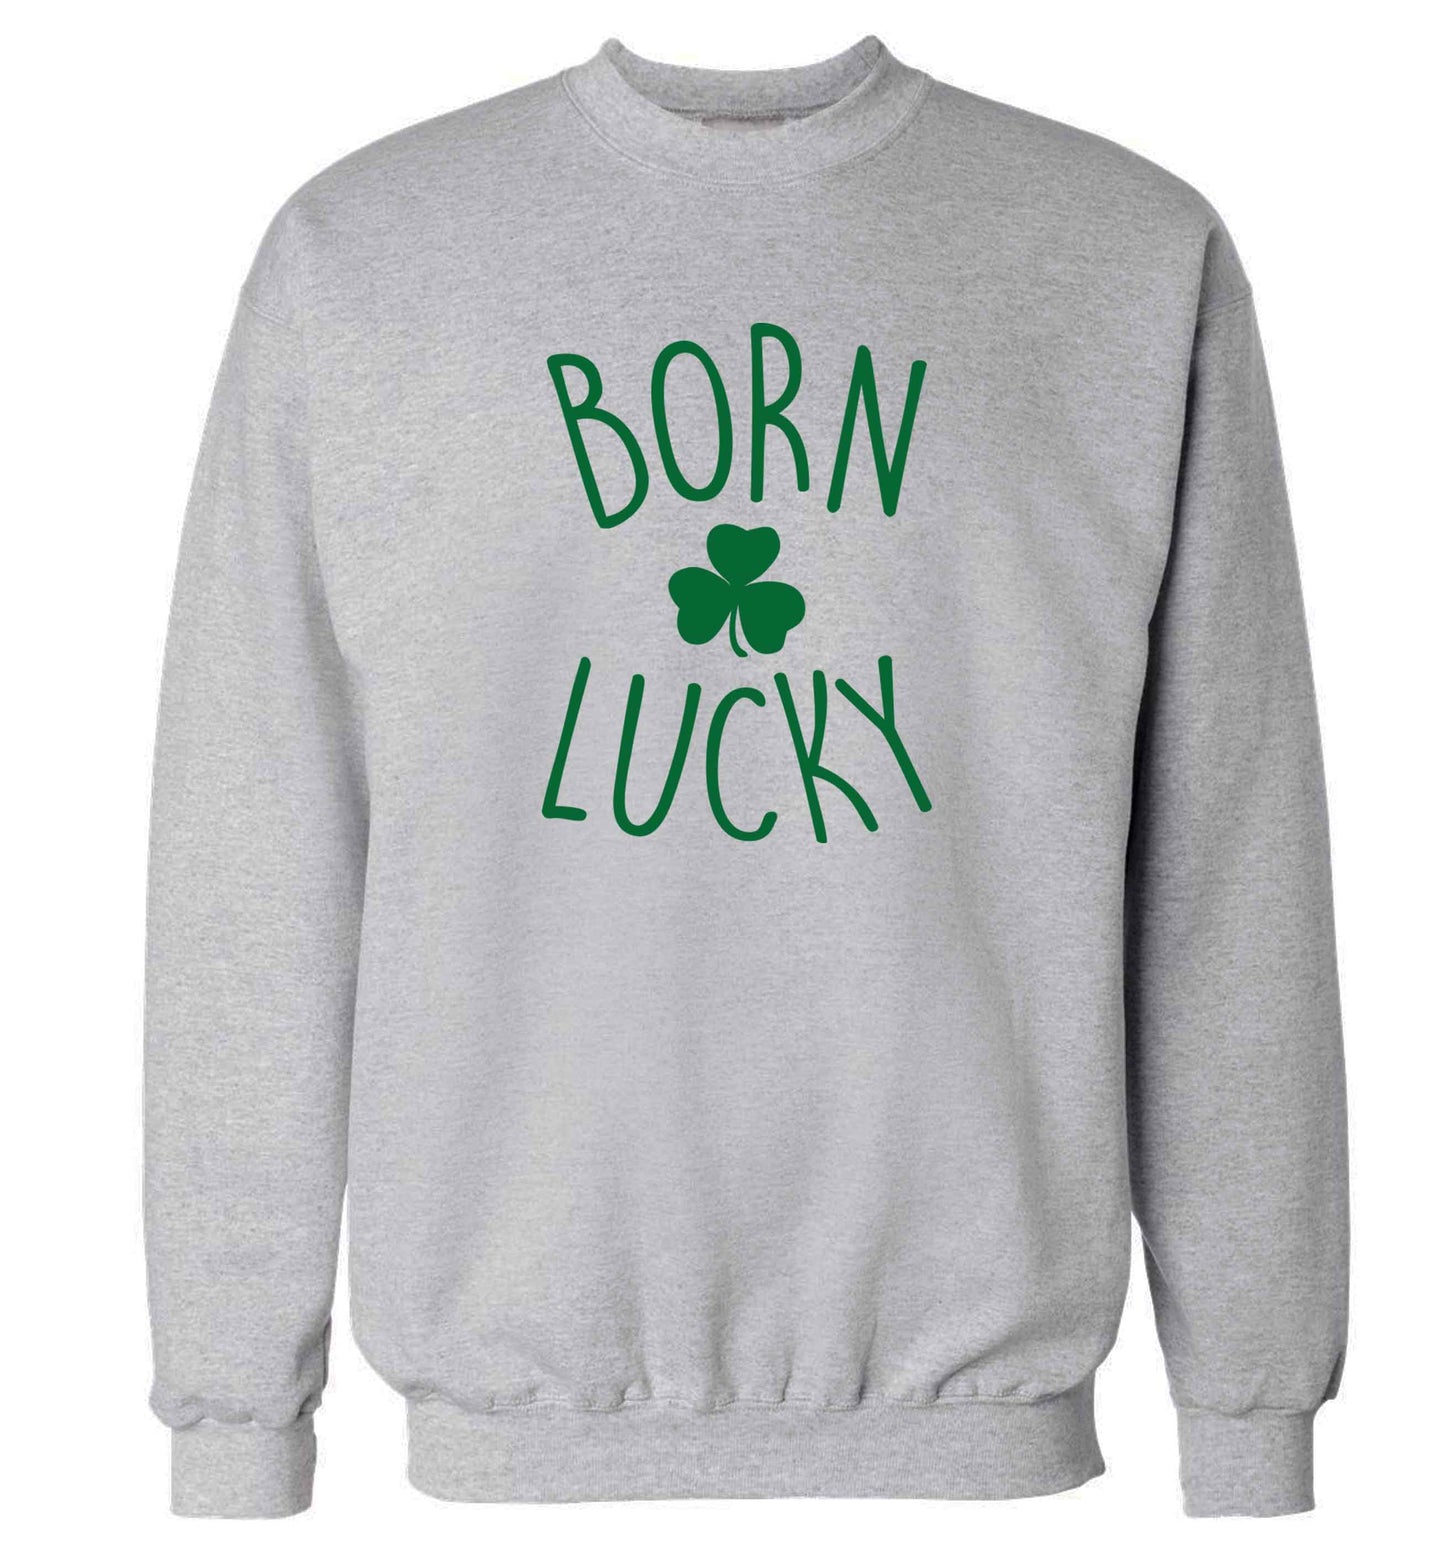 Born Lucky adult's unisex grey sweater 2XL